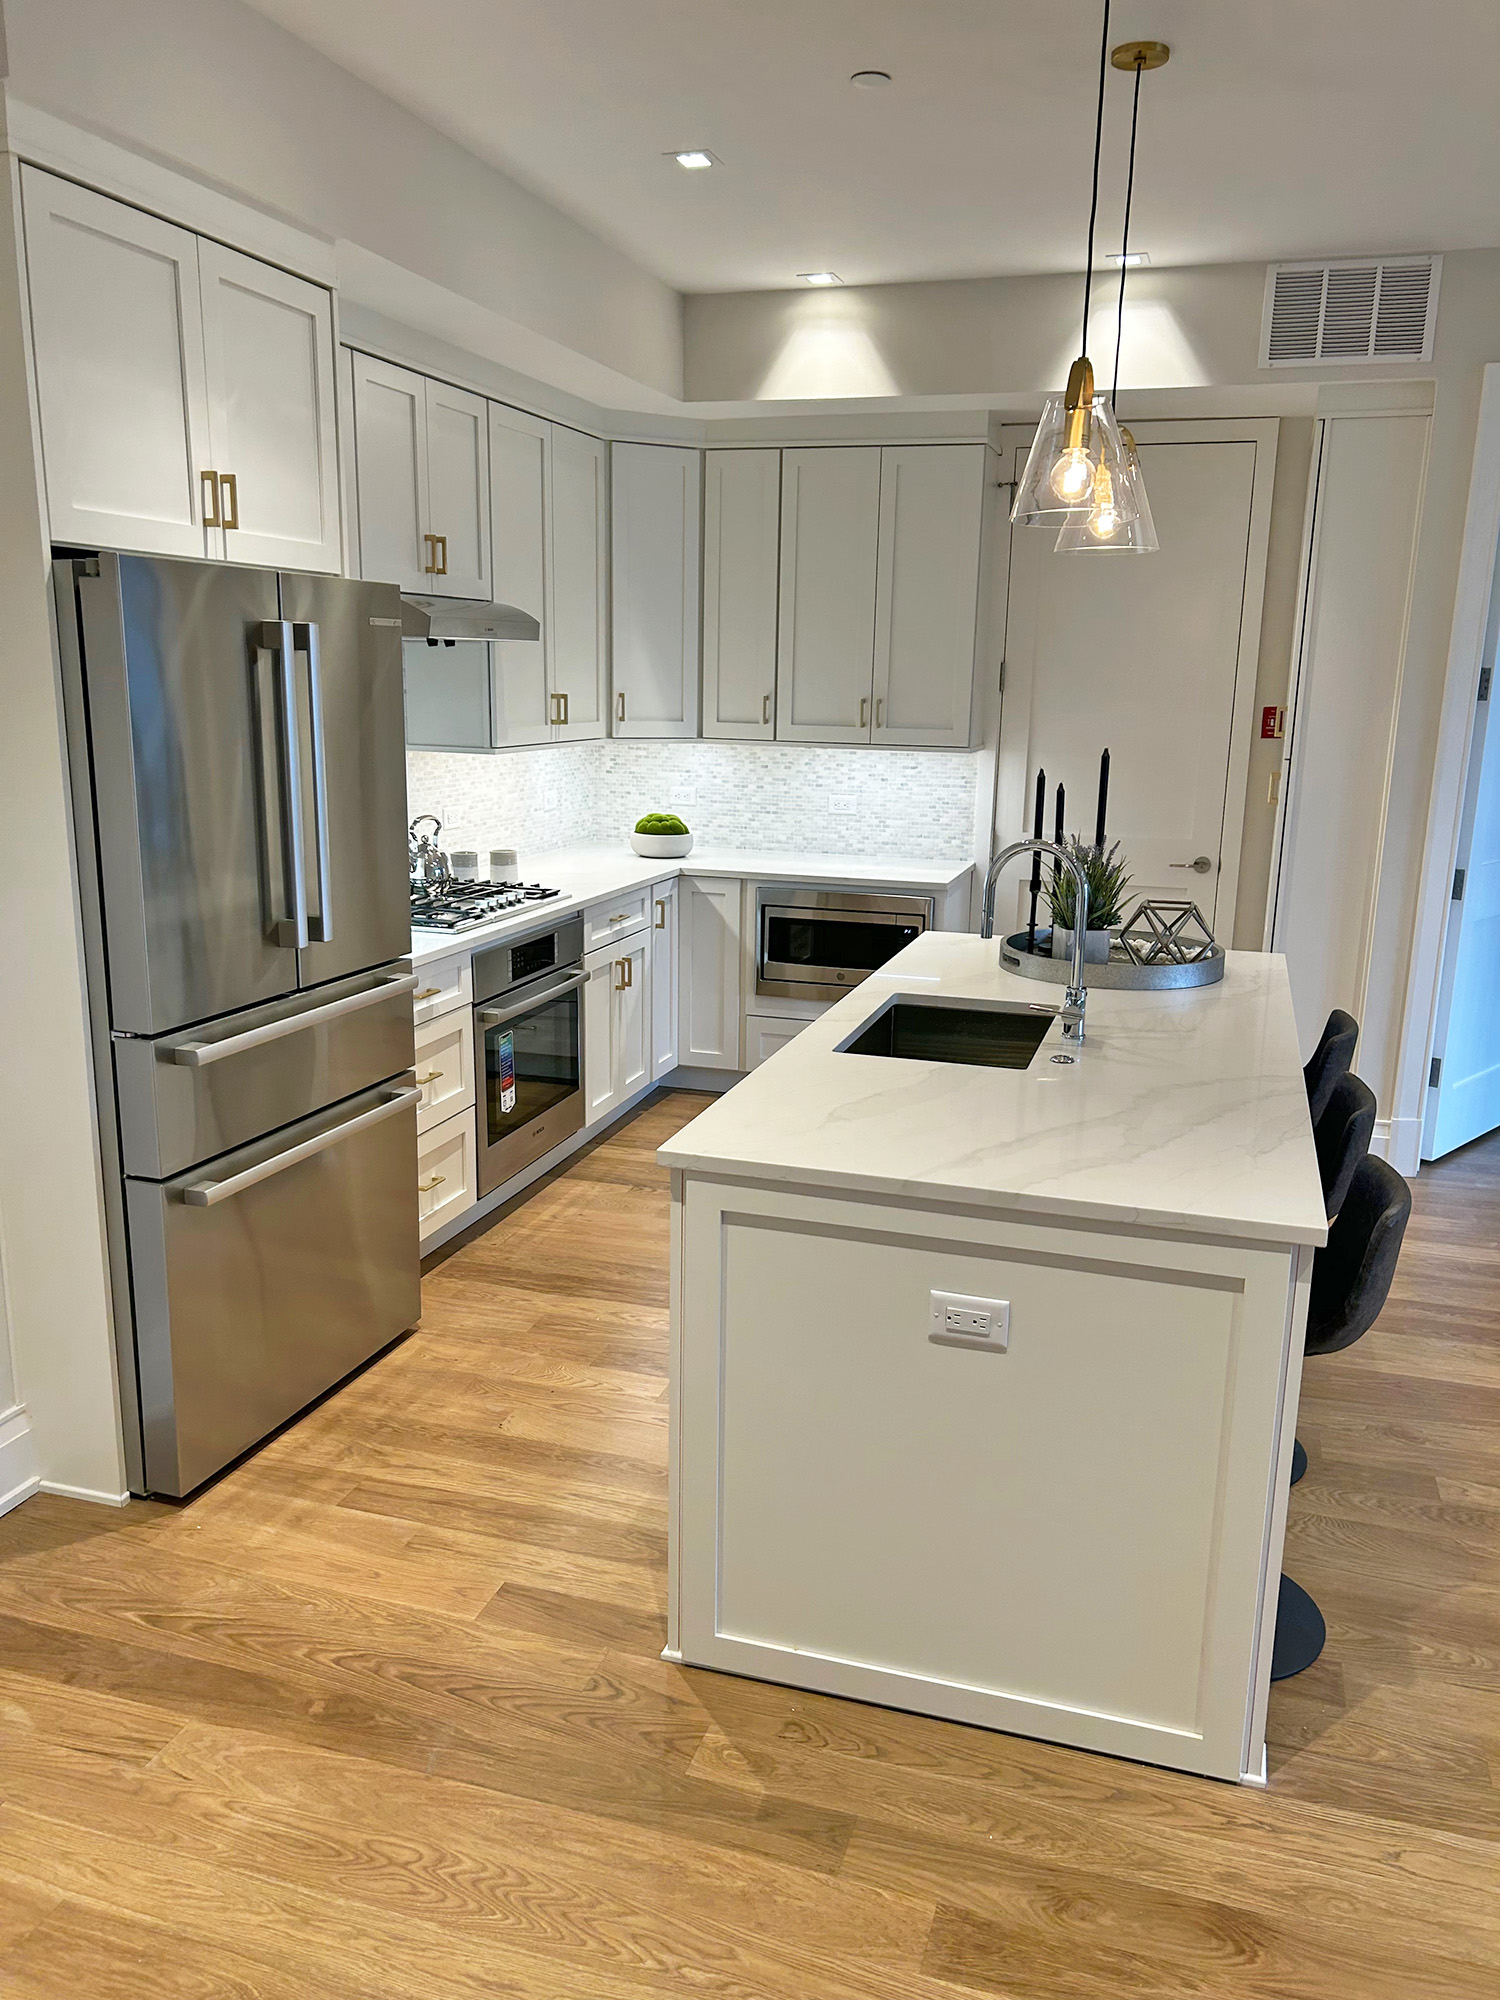 2-bedroom-multi-family-apartment-kitchen